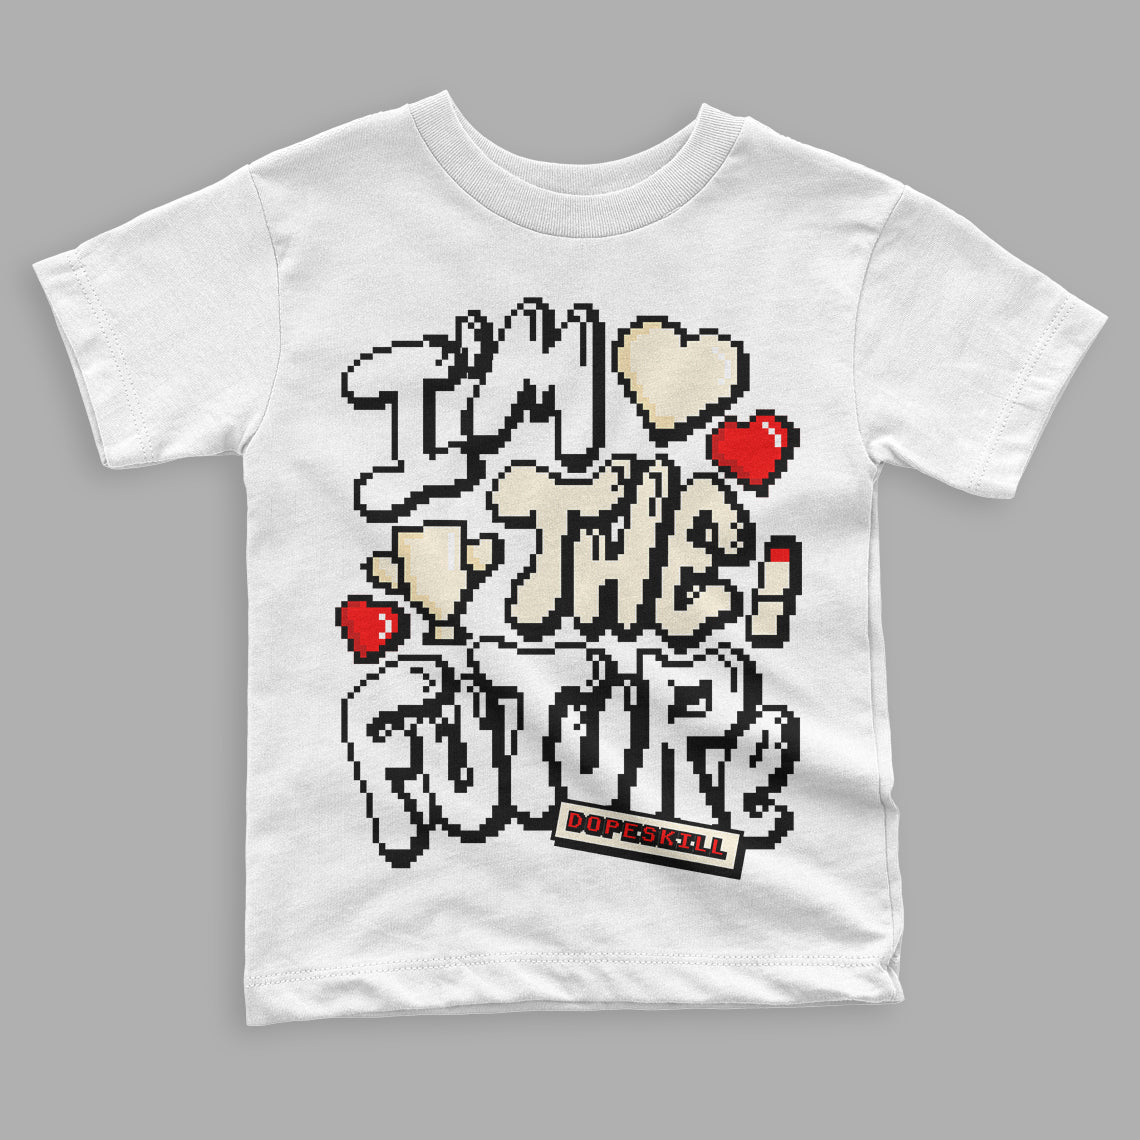 Toddler DOPESKILL Future Kids Graphic T-shirt The – DopeSkill Low 72-10 I\'m 11s